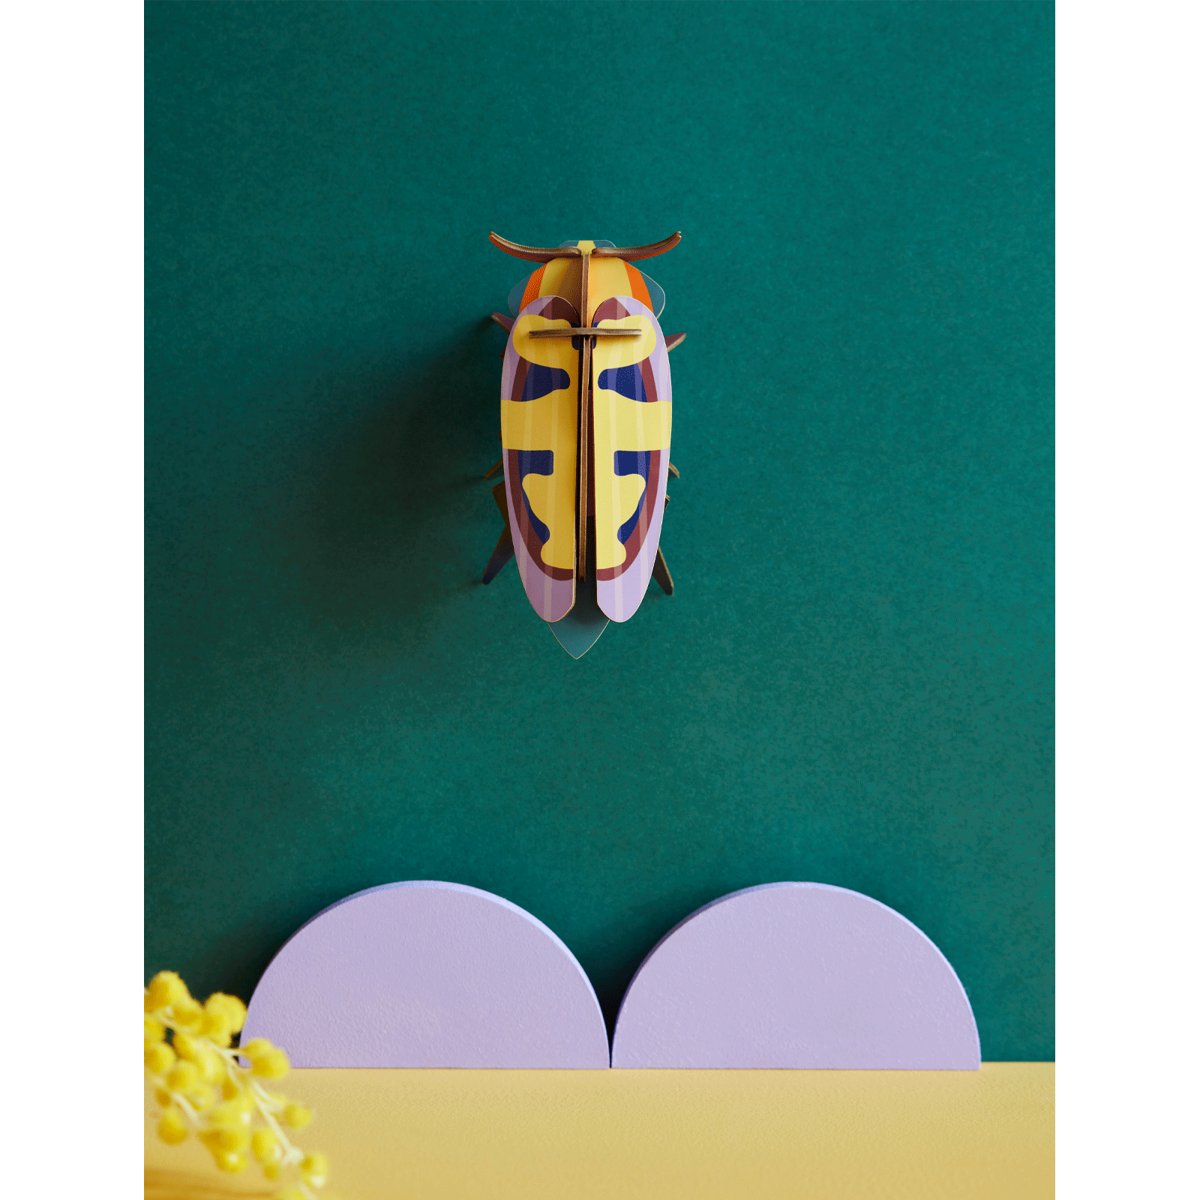 mondocherry - Studio Roof | mango flower beetle wall decor - wall